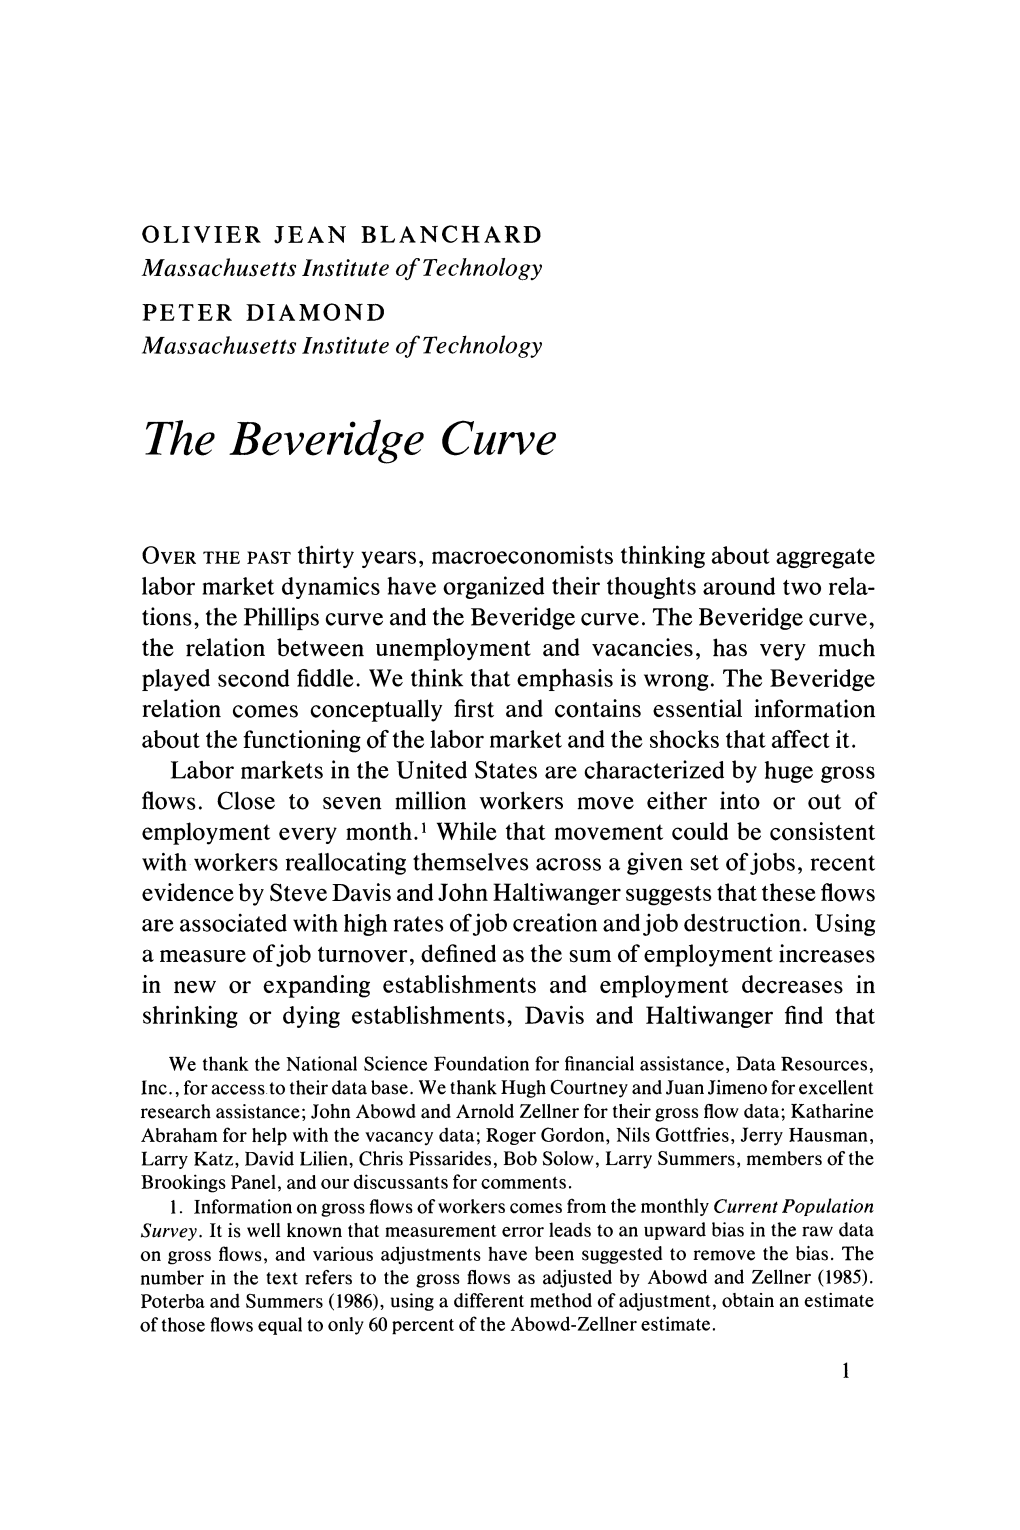 The Beveridge Curve